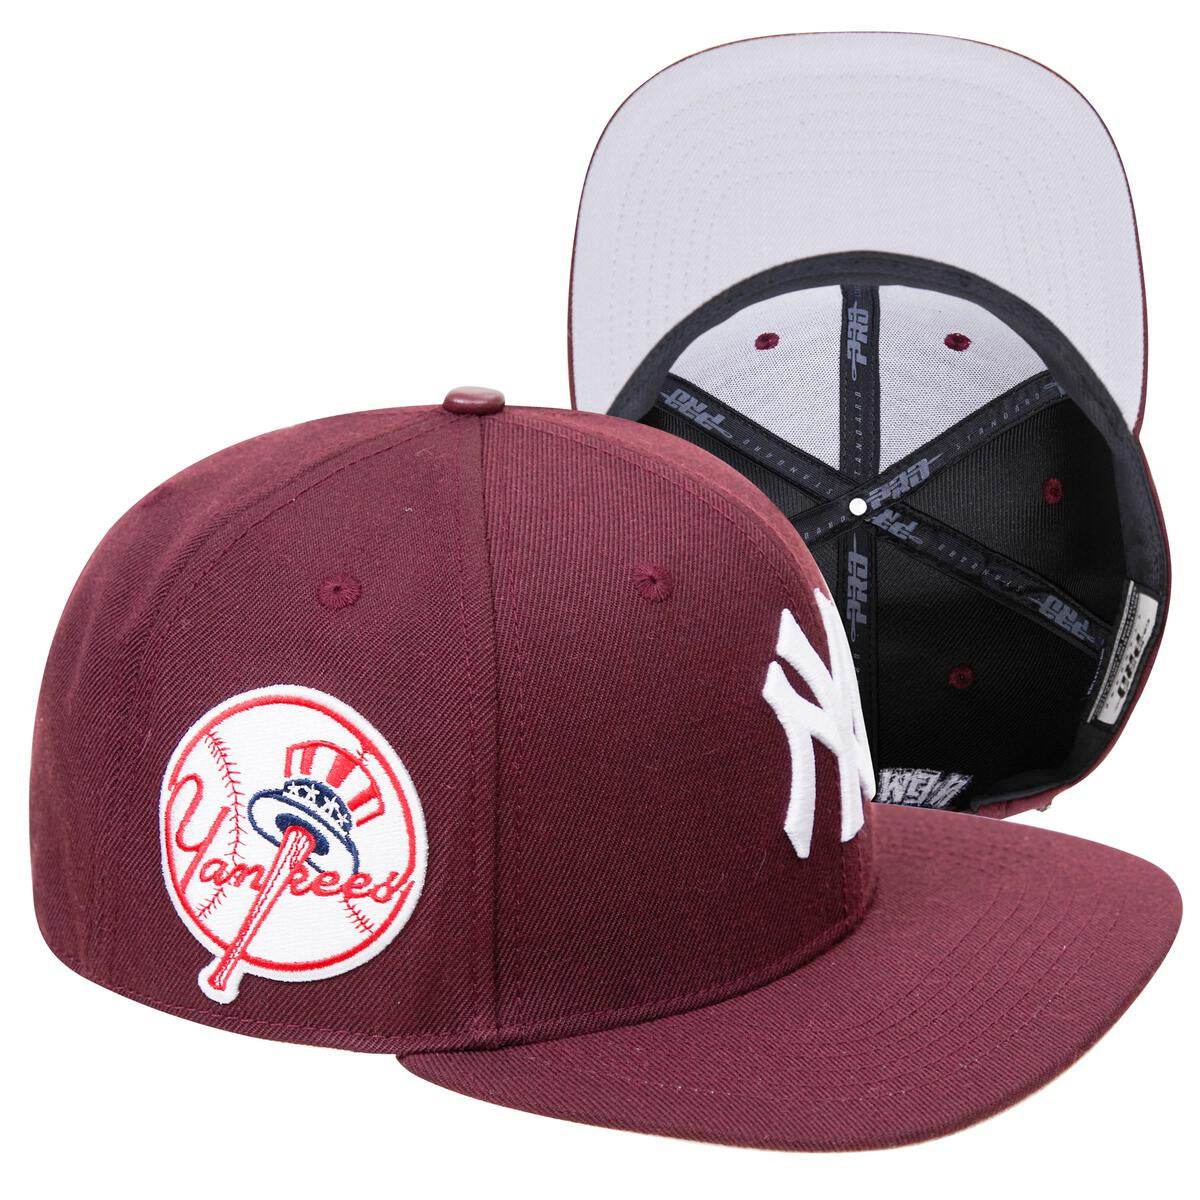 Pro Standard Mens MLB New York Yankees Shorts LNY333053-RED Red